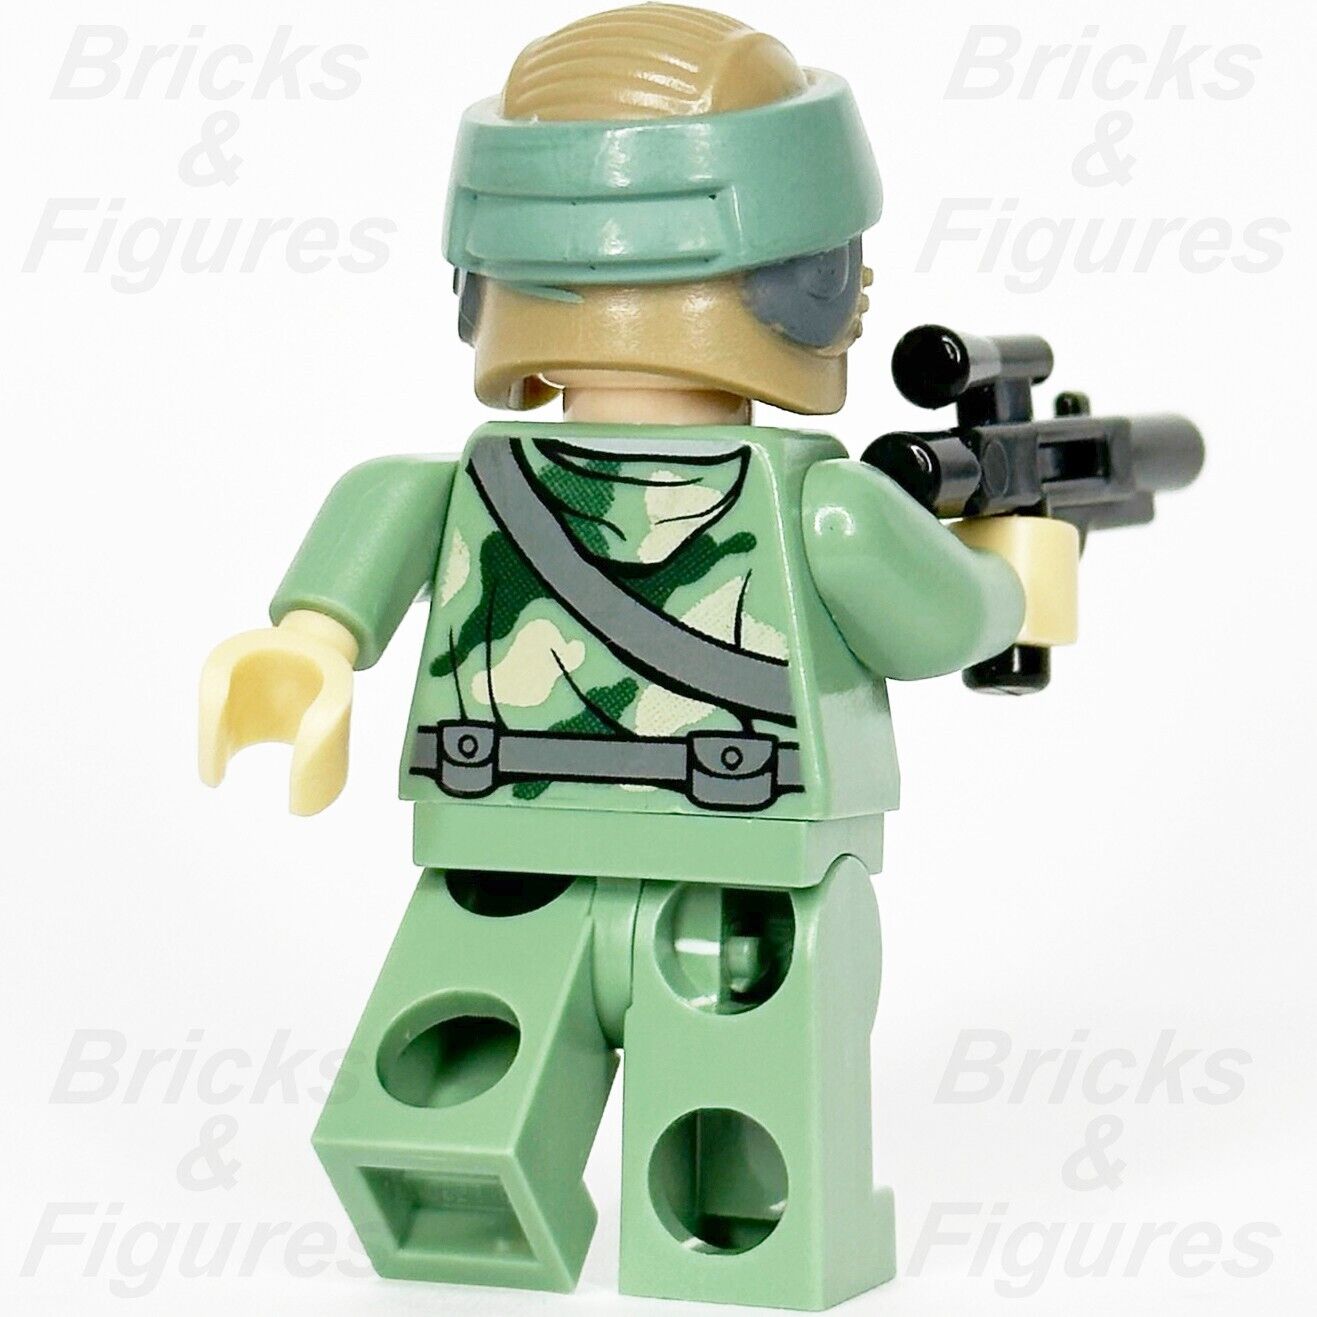 LEGO Star Wars Endor Rebel Trooper Minifigure Return of the Jedi 75023 sw0507 - Bricks & Figures